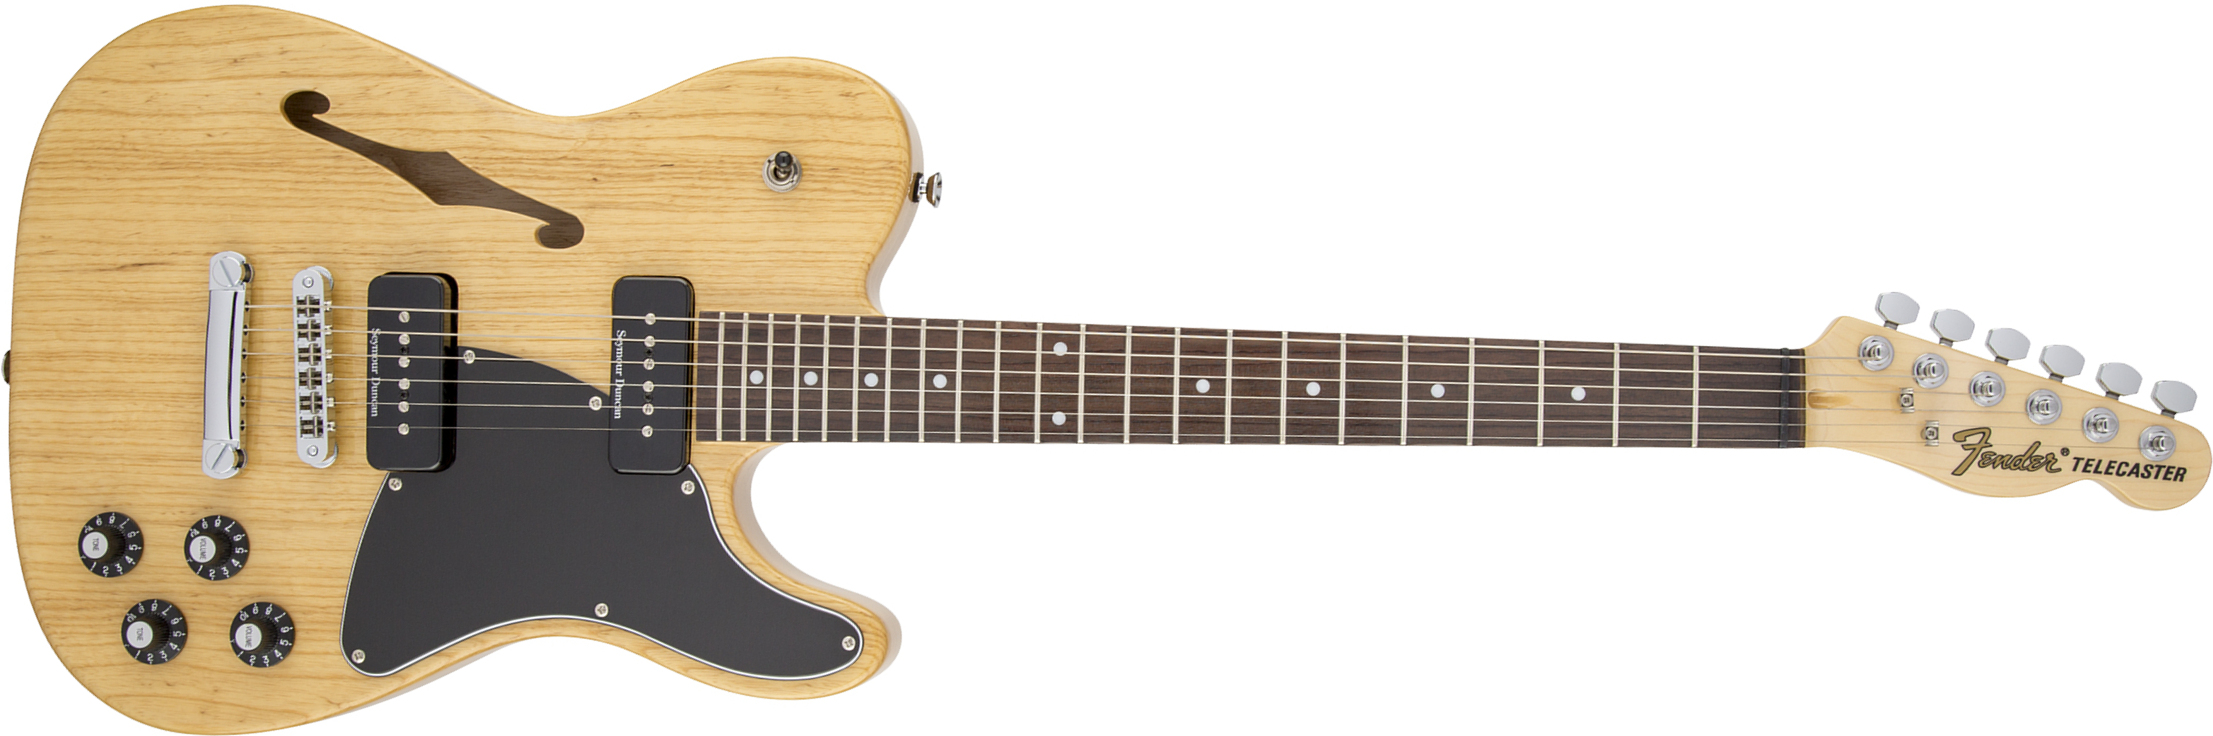 Fender Jim Adkins Tele Ja-90 Mex Signature 2p90 Lau - Natural - Guitarra eléctrica con forma de tel - Main picture